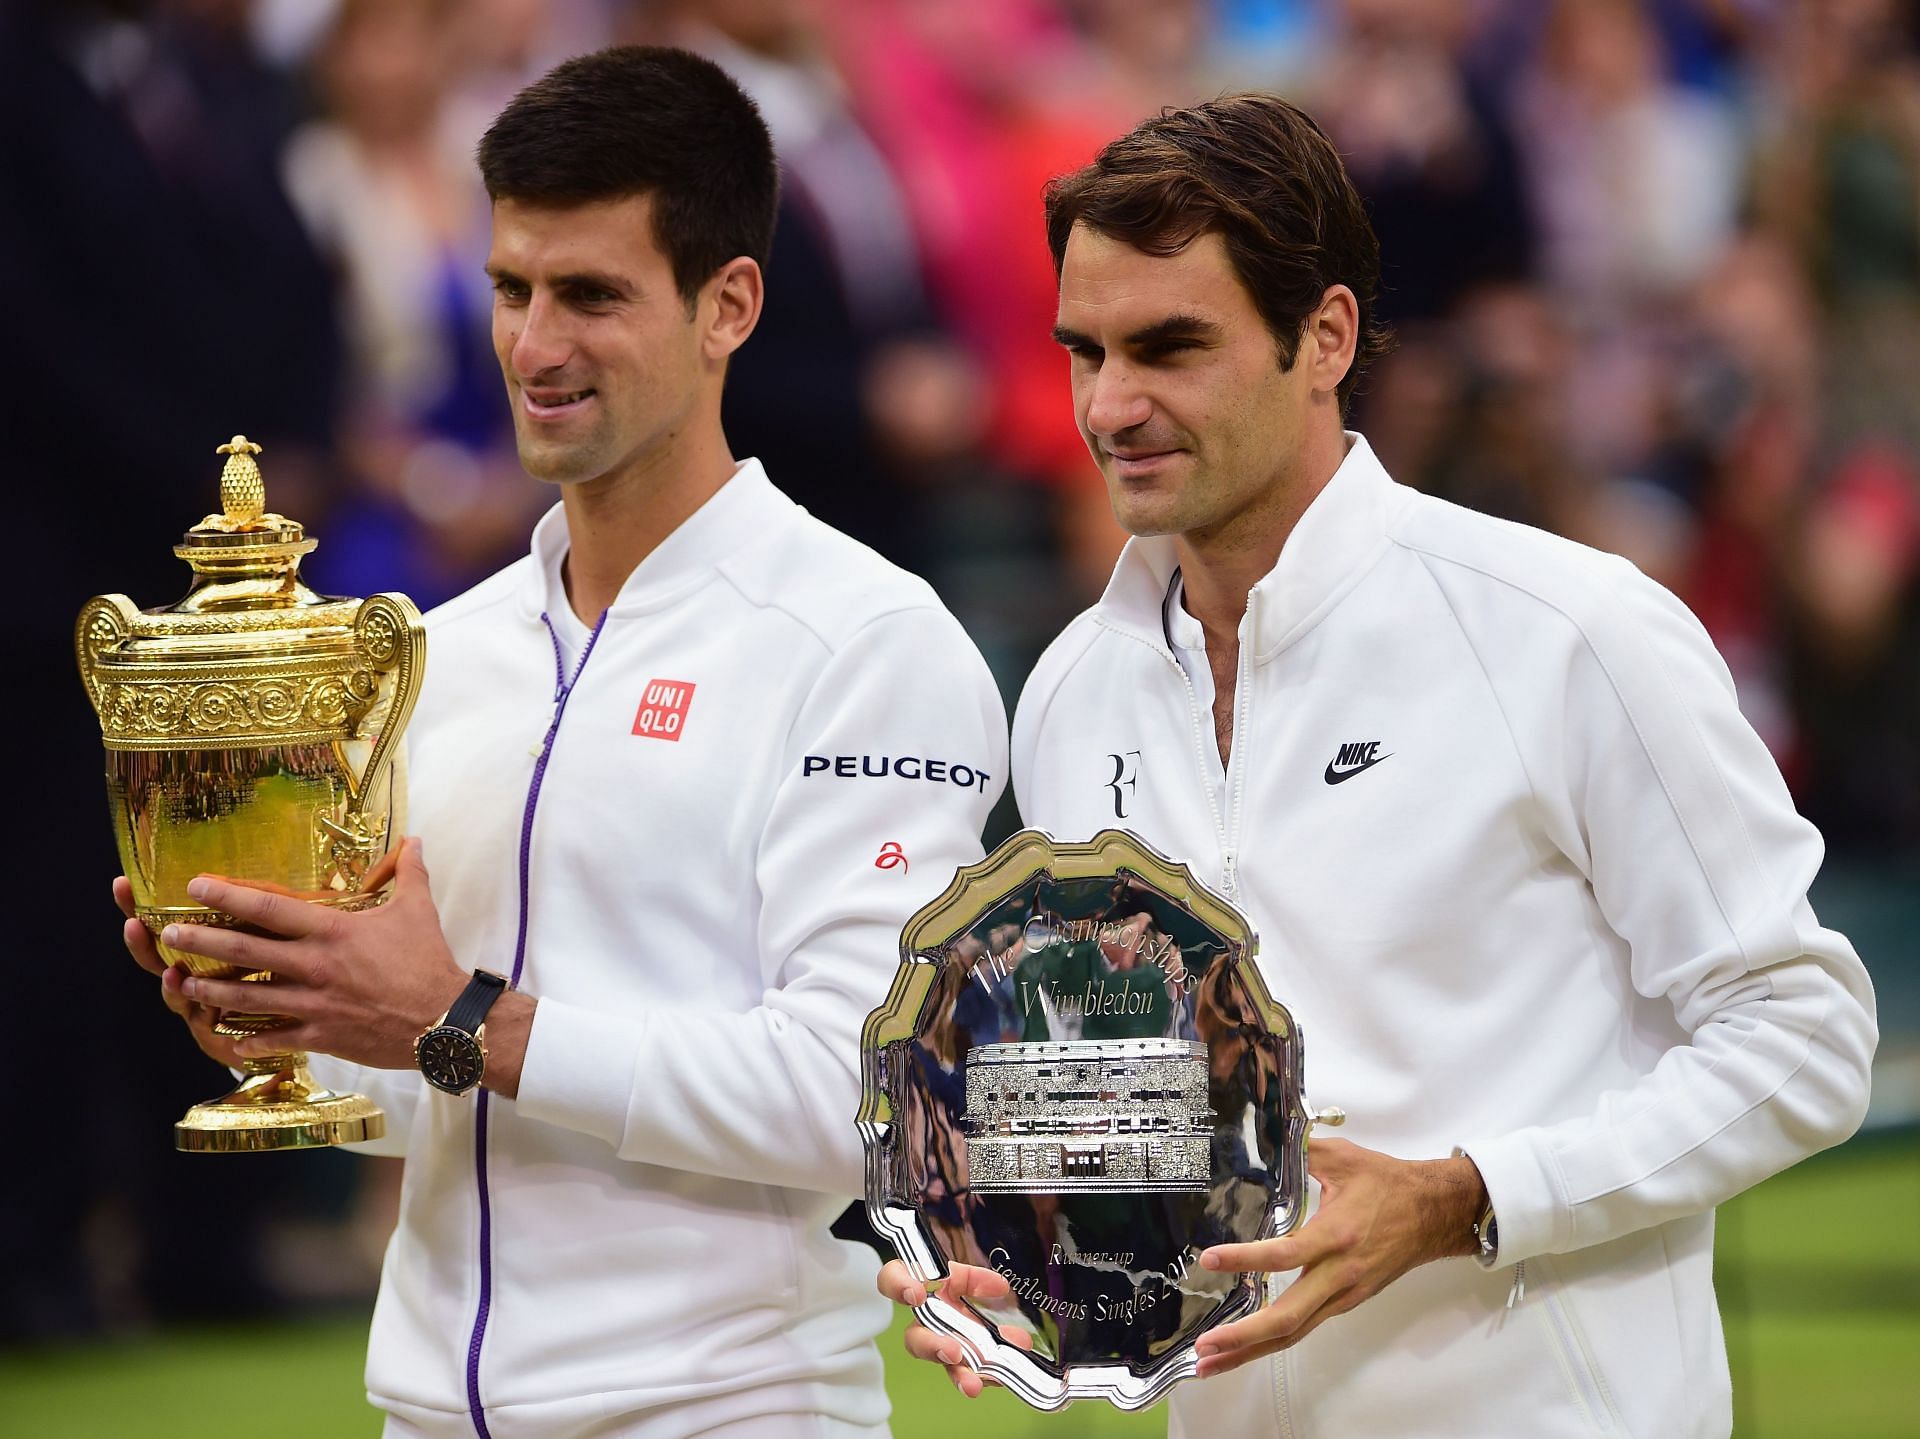 Novak Djokovic and Roger Federer at The Championships